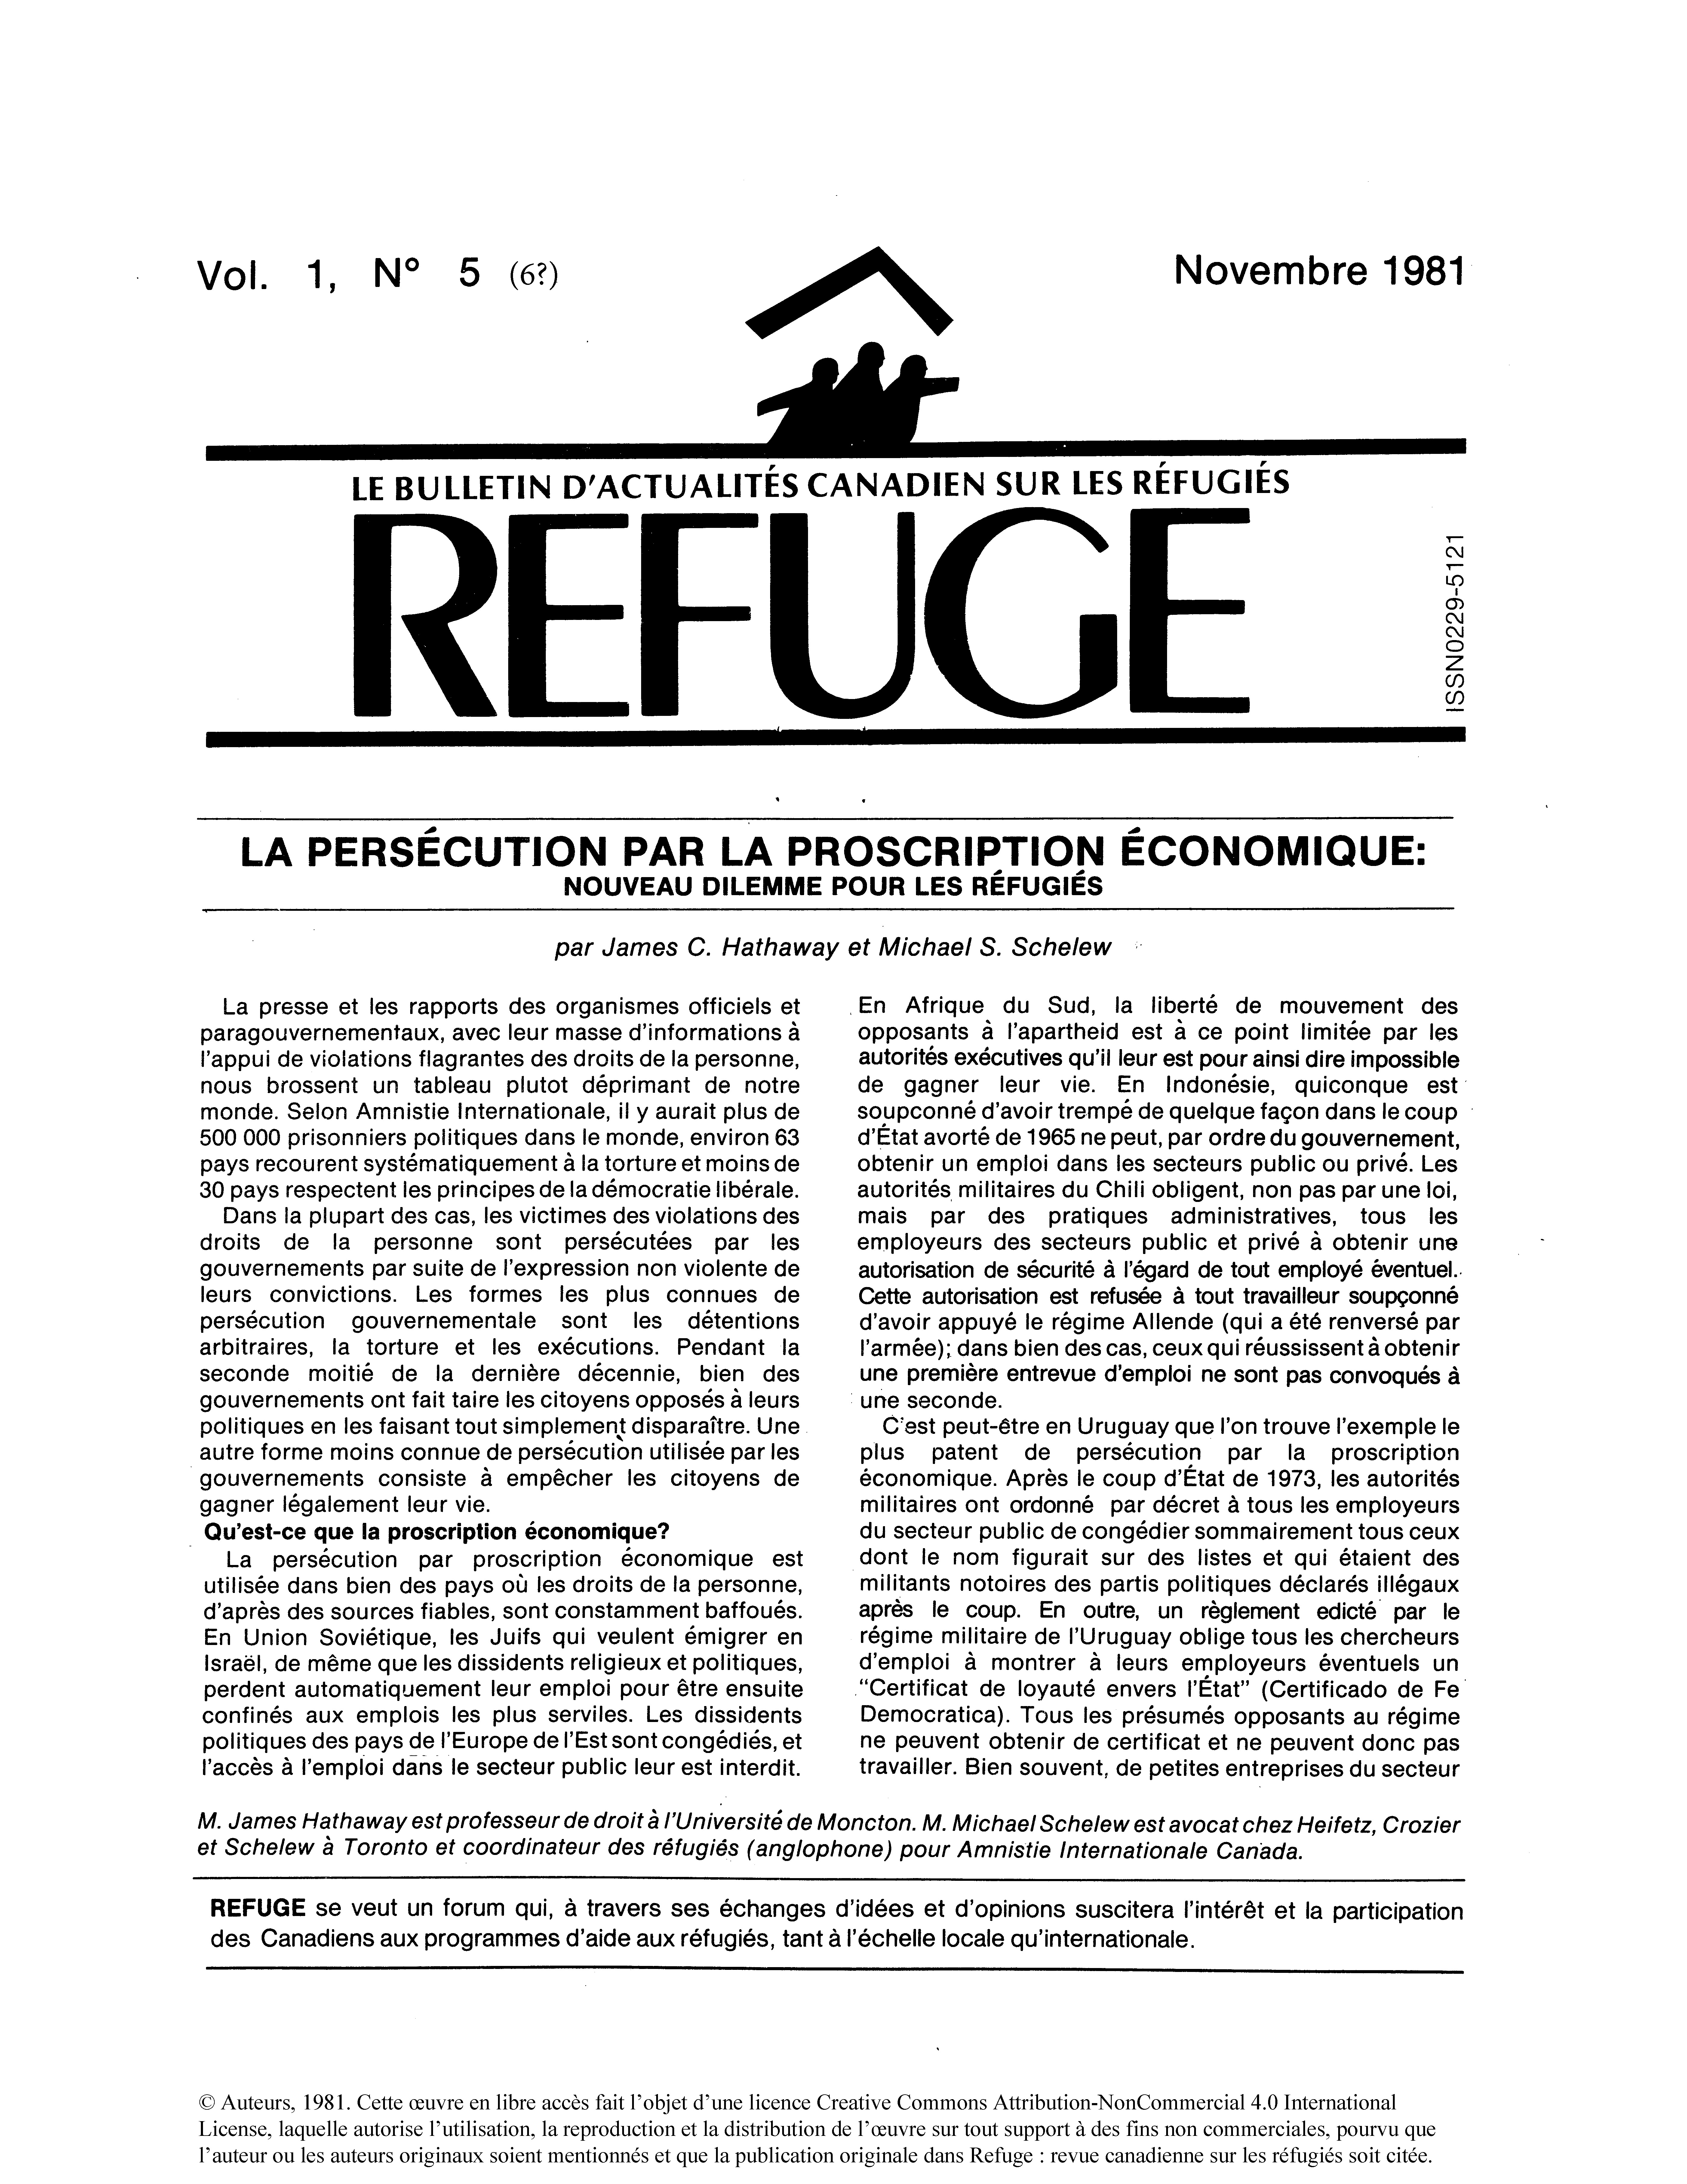 first page Refuge vol. 1.5 1981